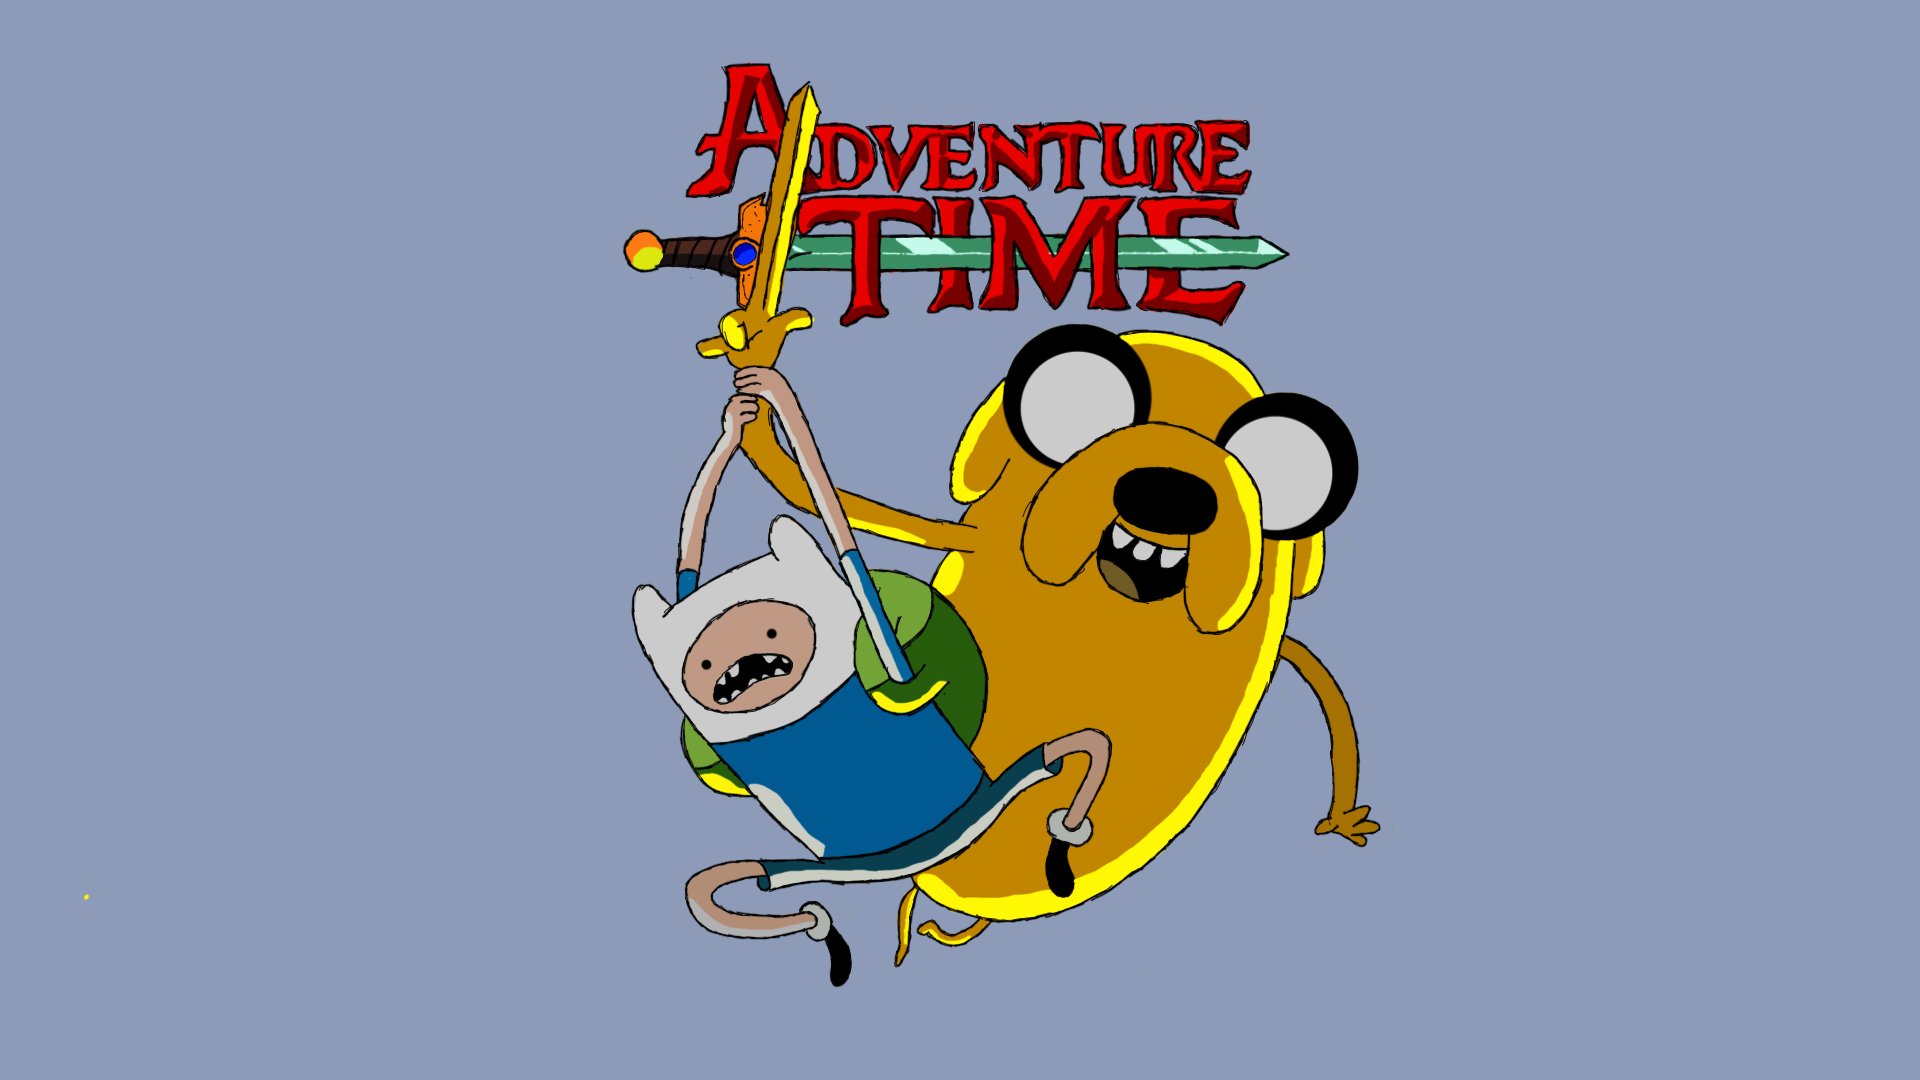 Adventure time обои на телефон